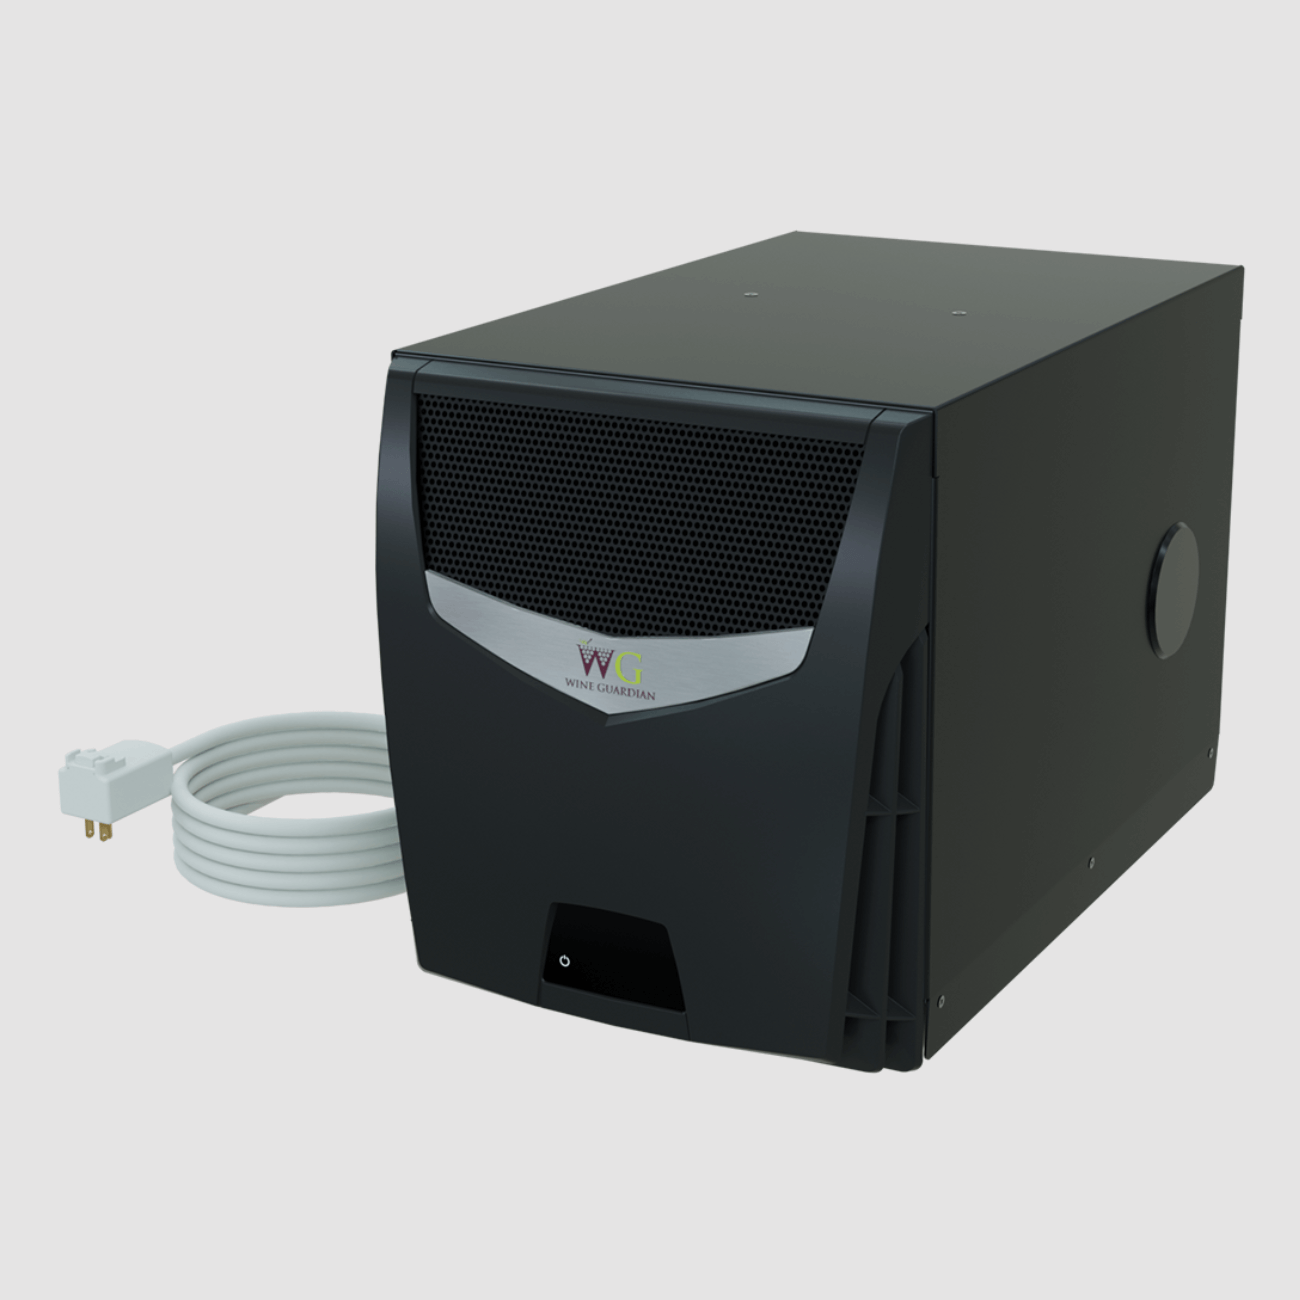 WINE GUARDIAN TTW009 Cooler with power cord